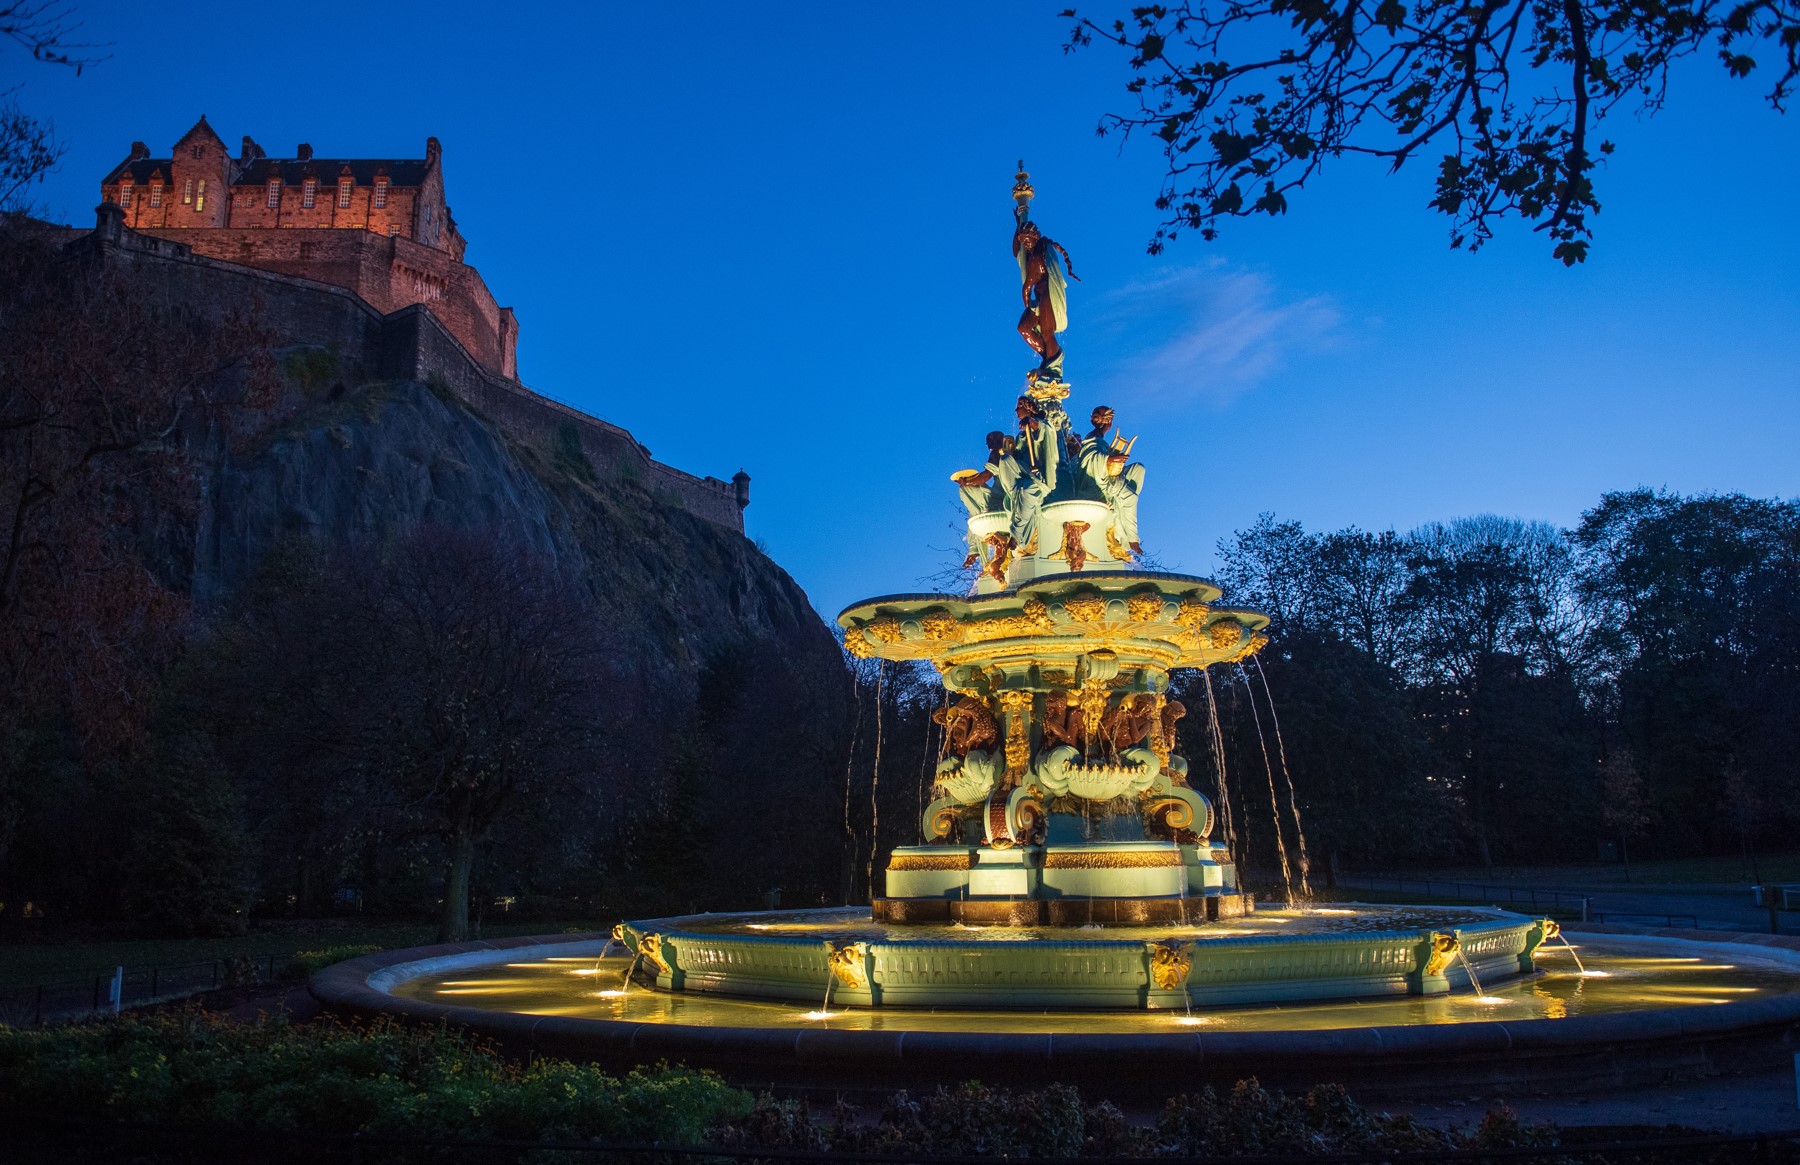 Edinburgh engineers hail work on £2m Ross Fountain restoration